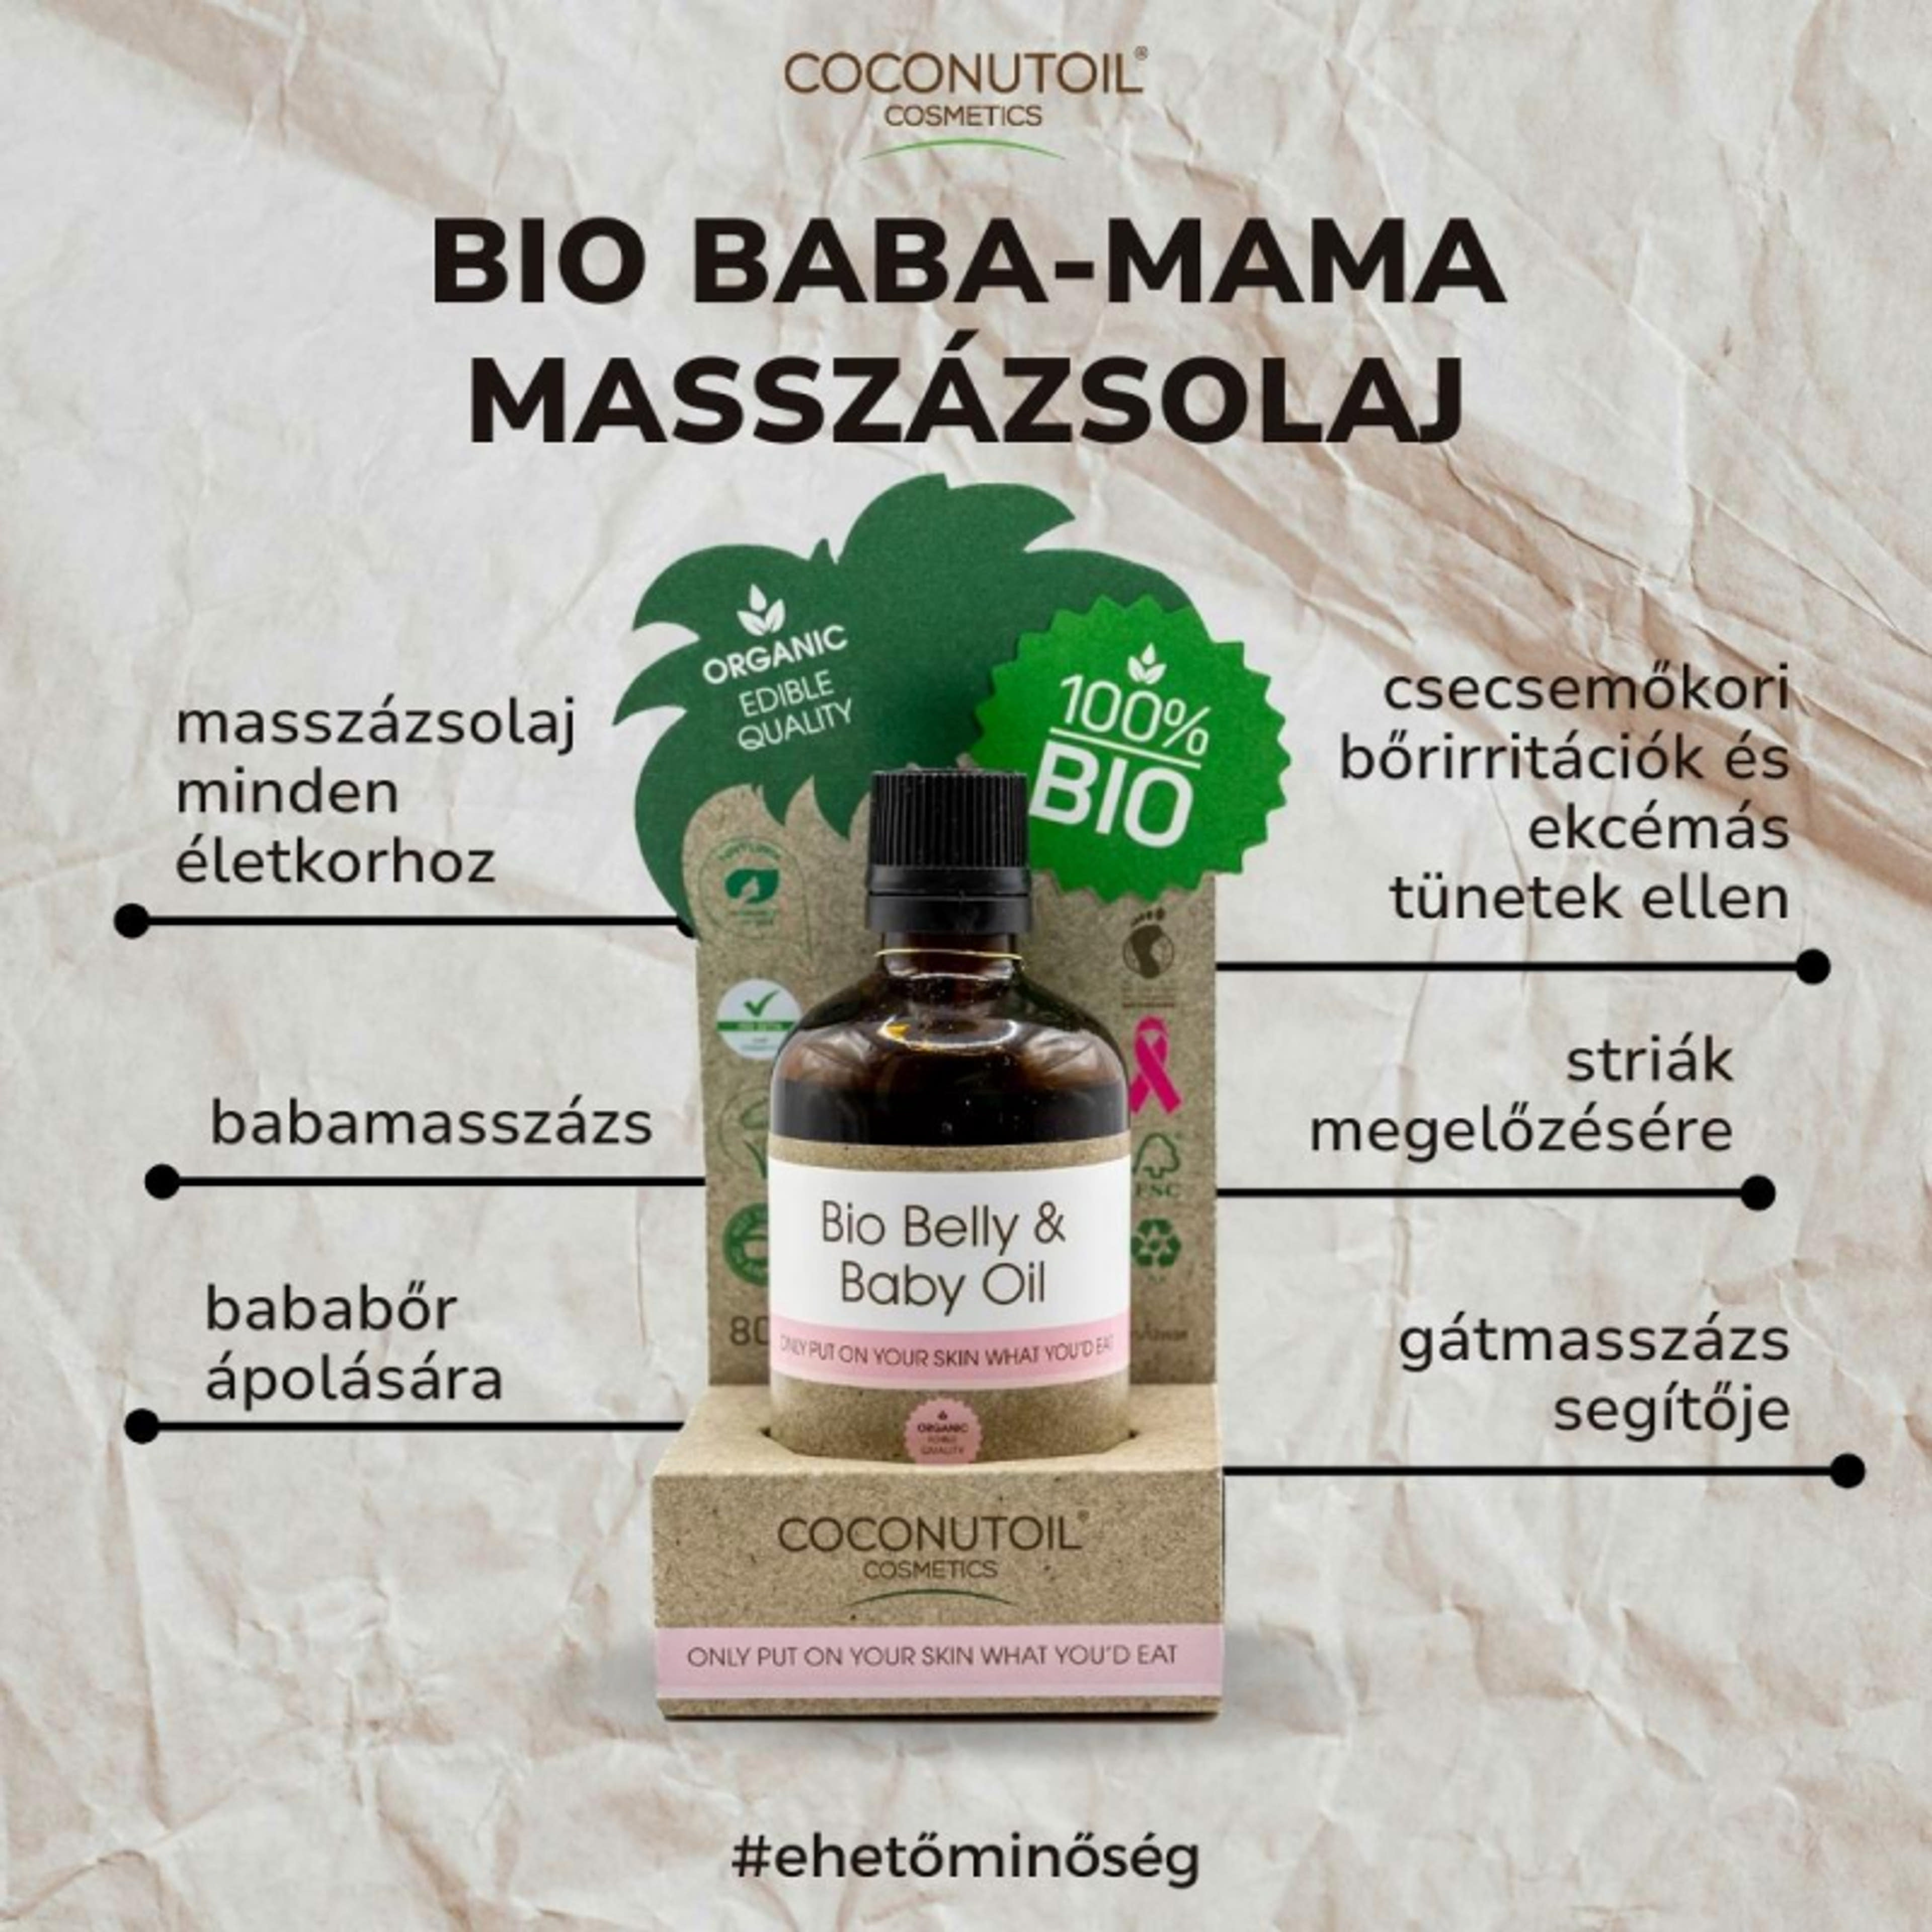 Coconutoil Cosmetics Bio baba-mama masszázsolaj - 80 ml-3